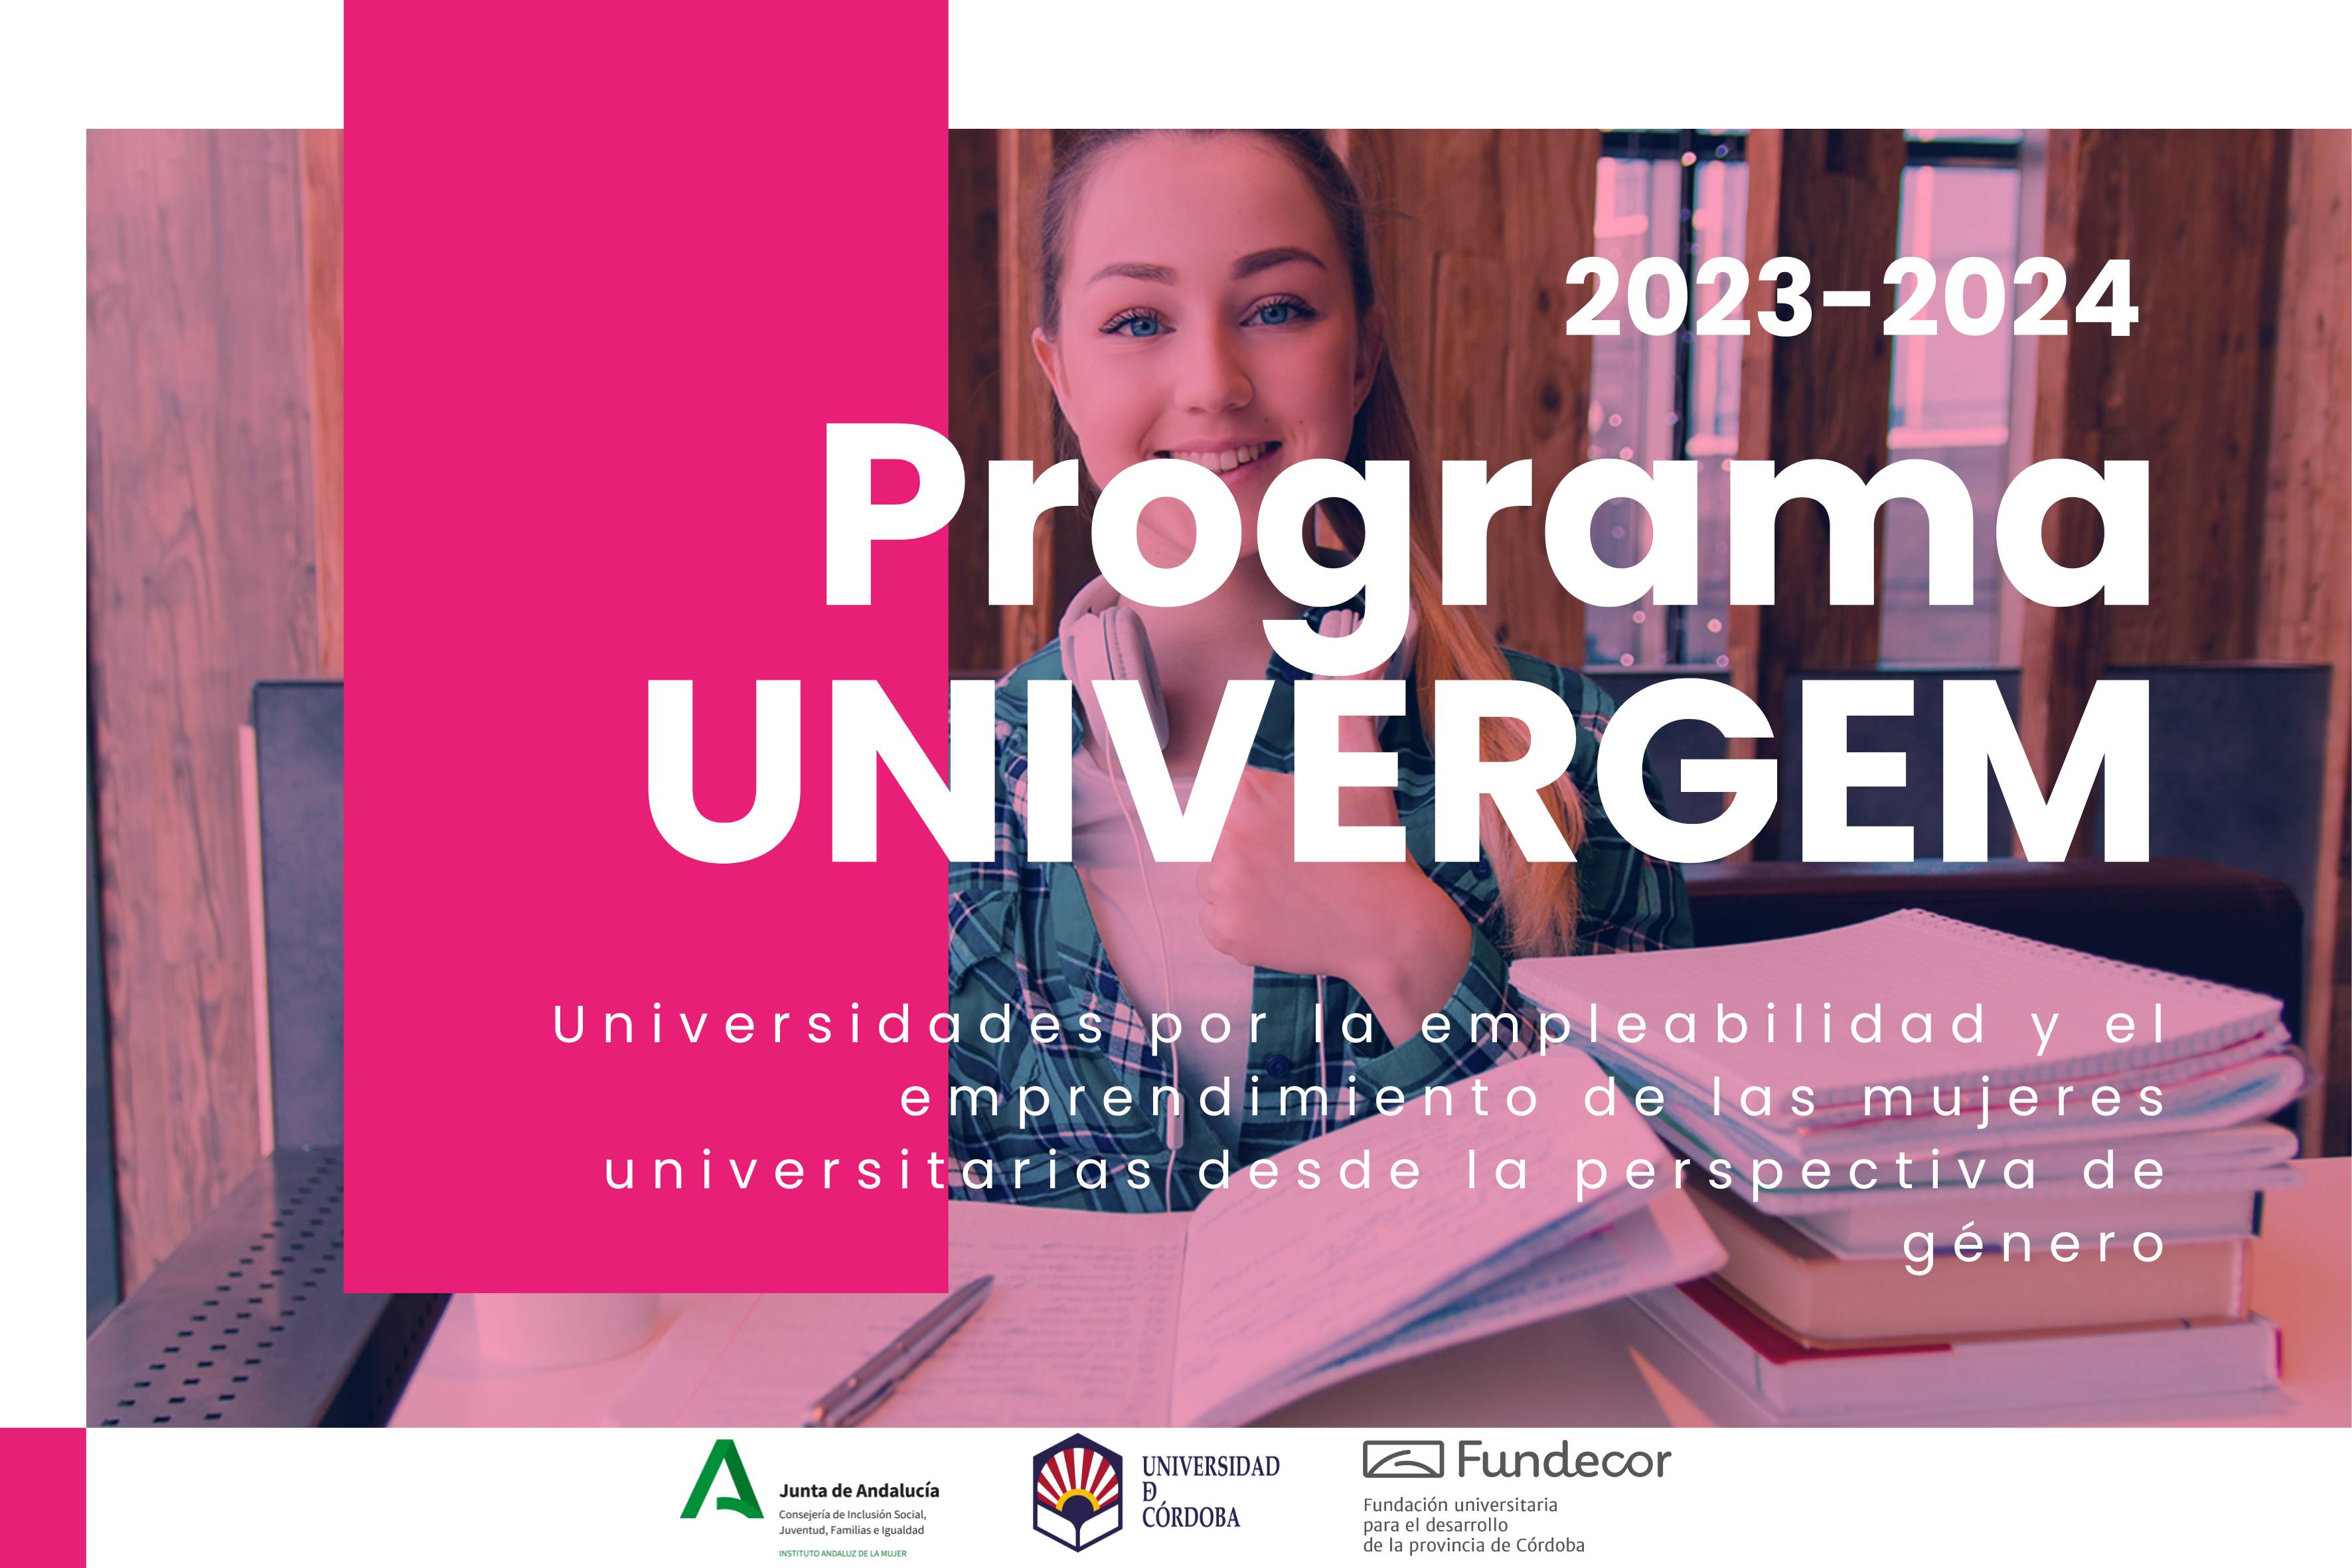 Programa UNIVERGEM 2023-2024